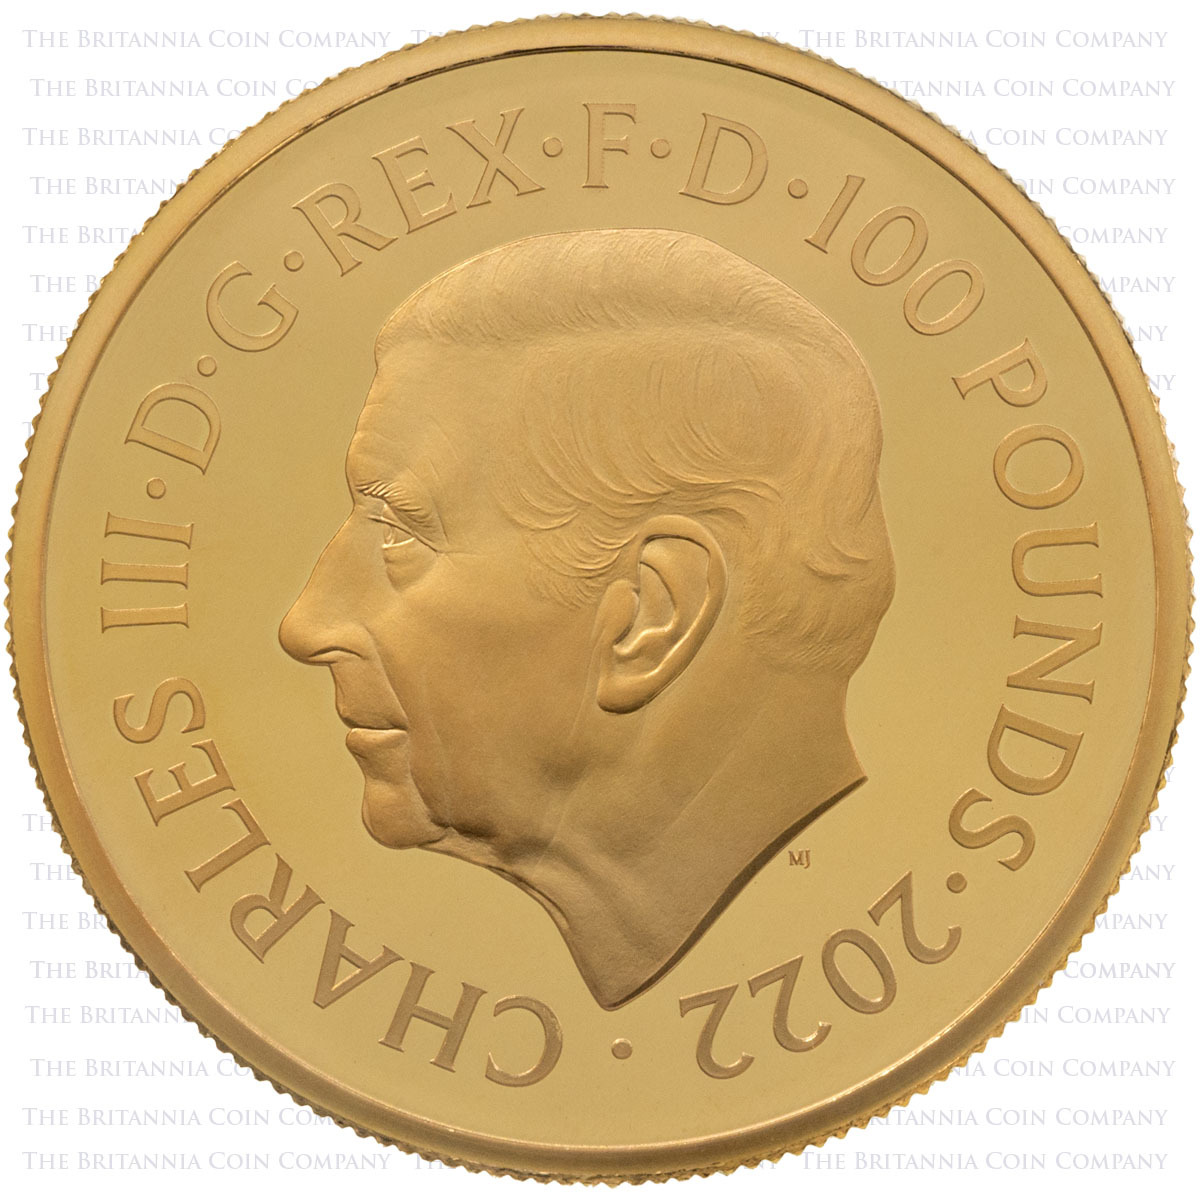 UK22QMG1 2022 Elizabeth II Memorial One Ounce Gold Proof Coin Obverse